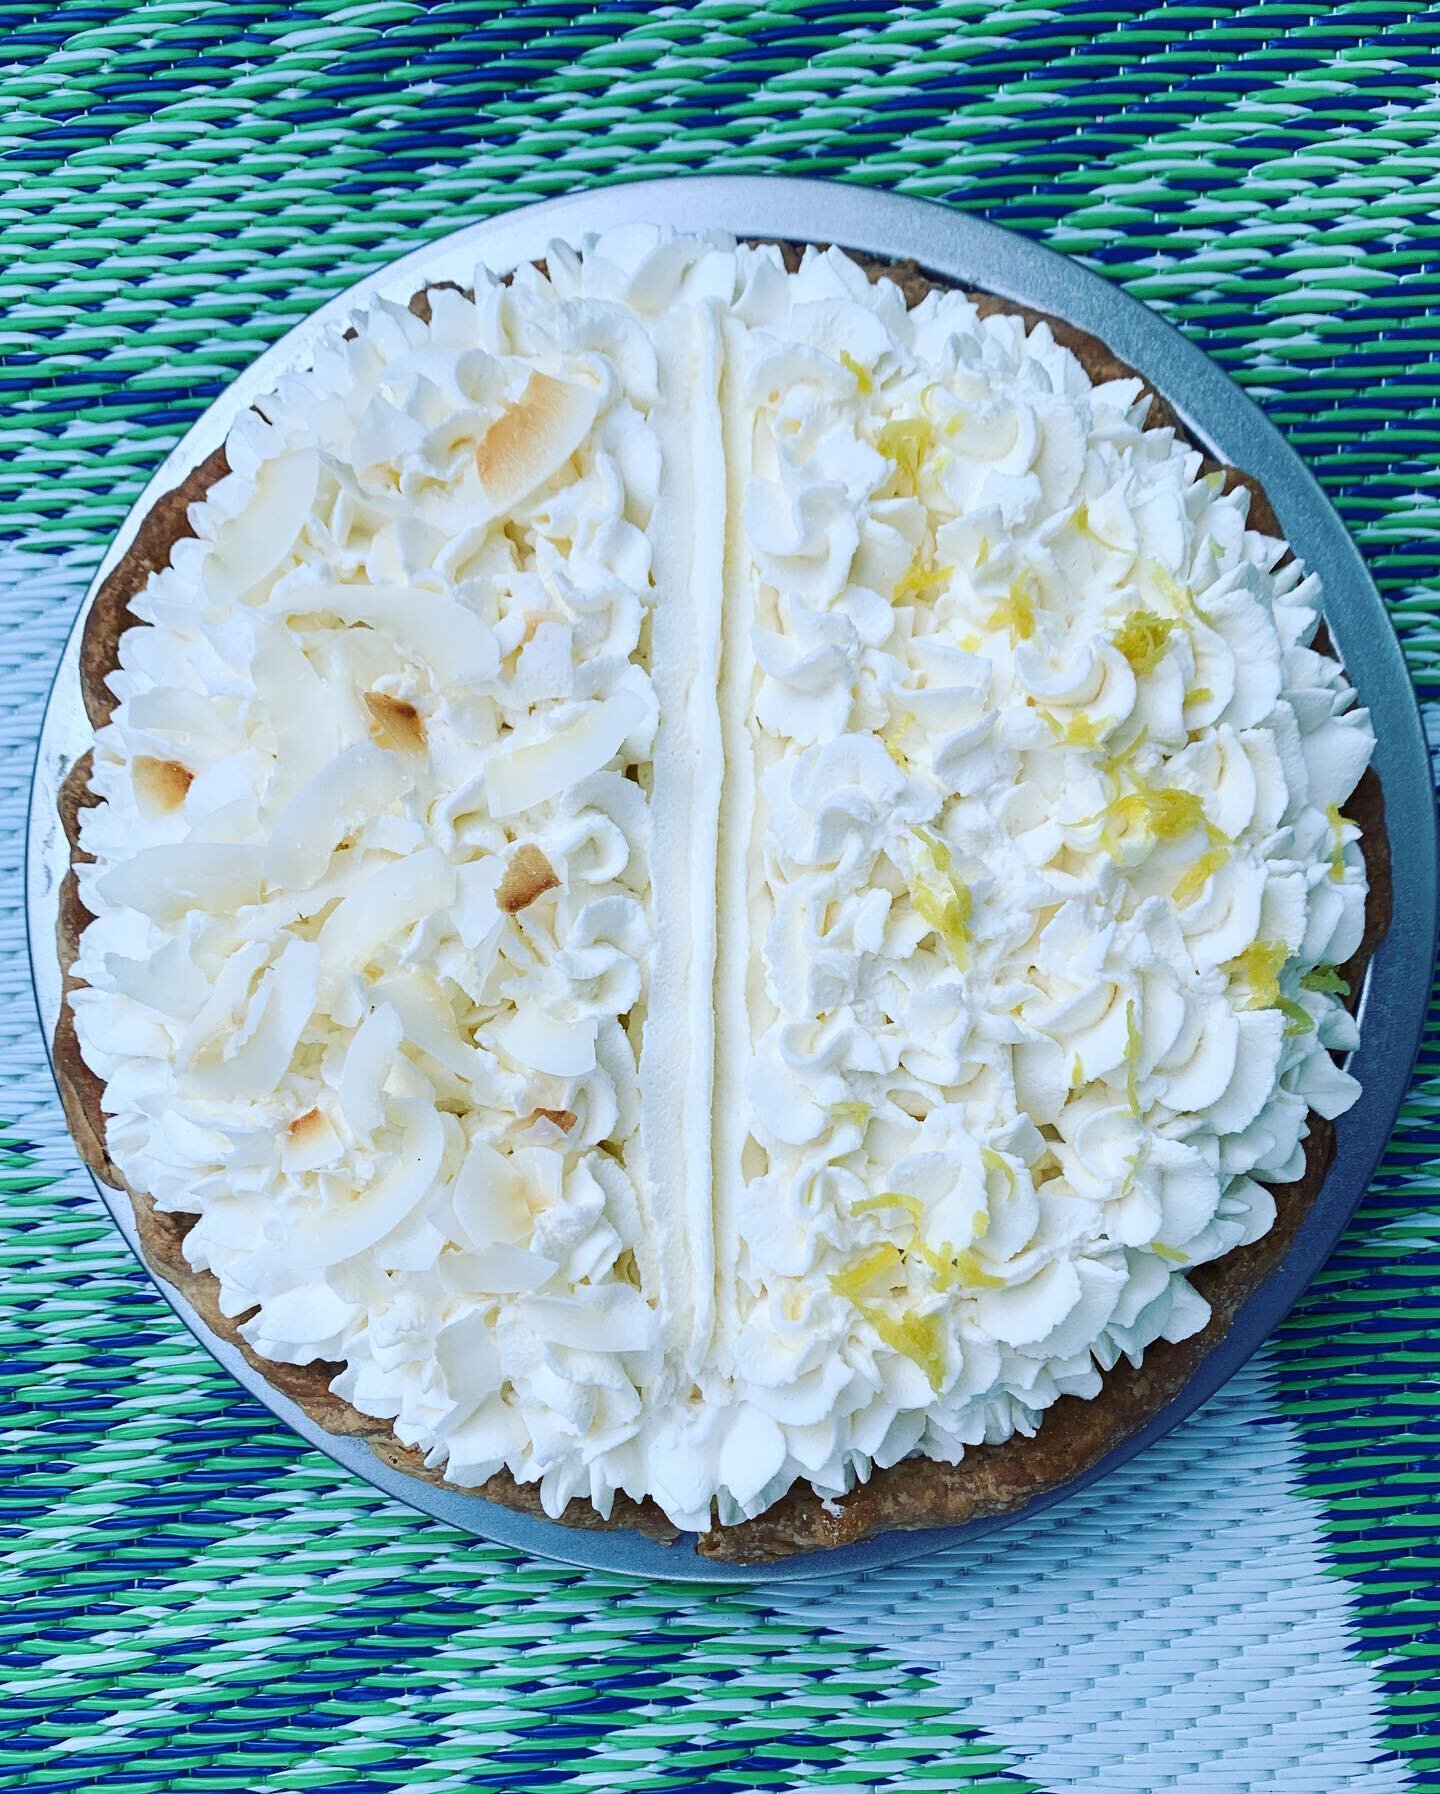 When you can&rsquo;t decide which type of pie to bring #coconutcream #lemoncustard #bipie #chantillycream #happypieday